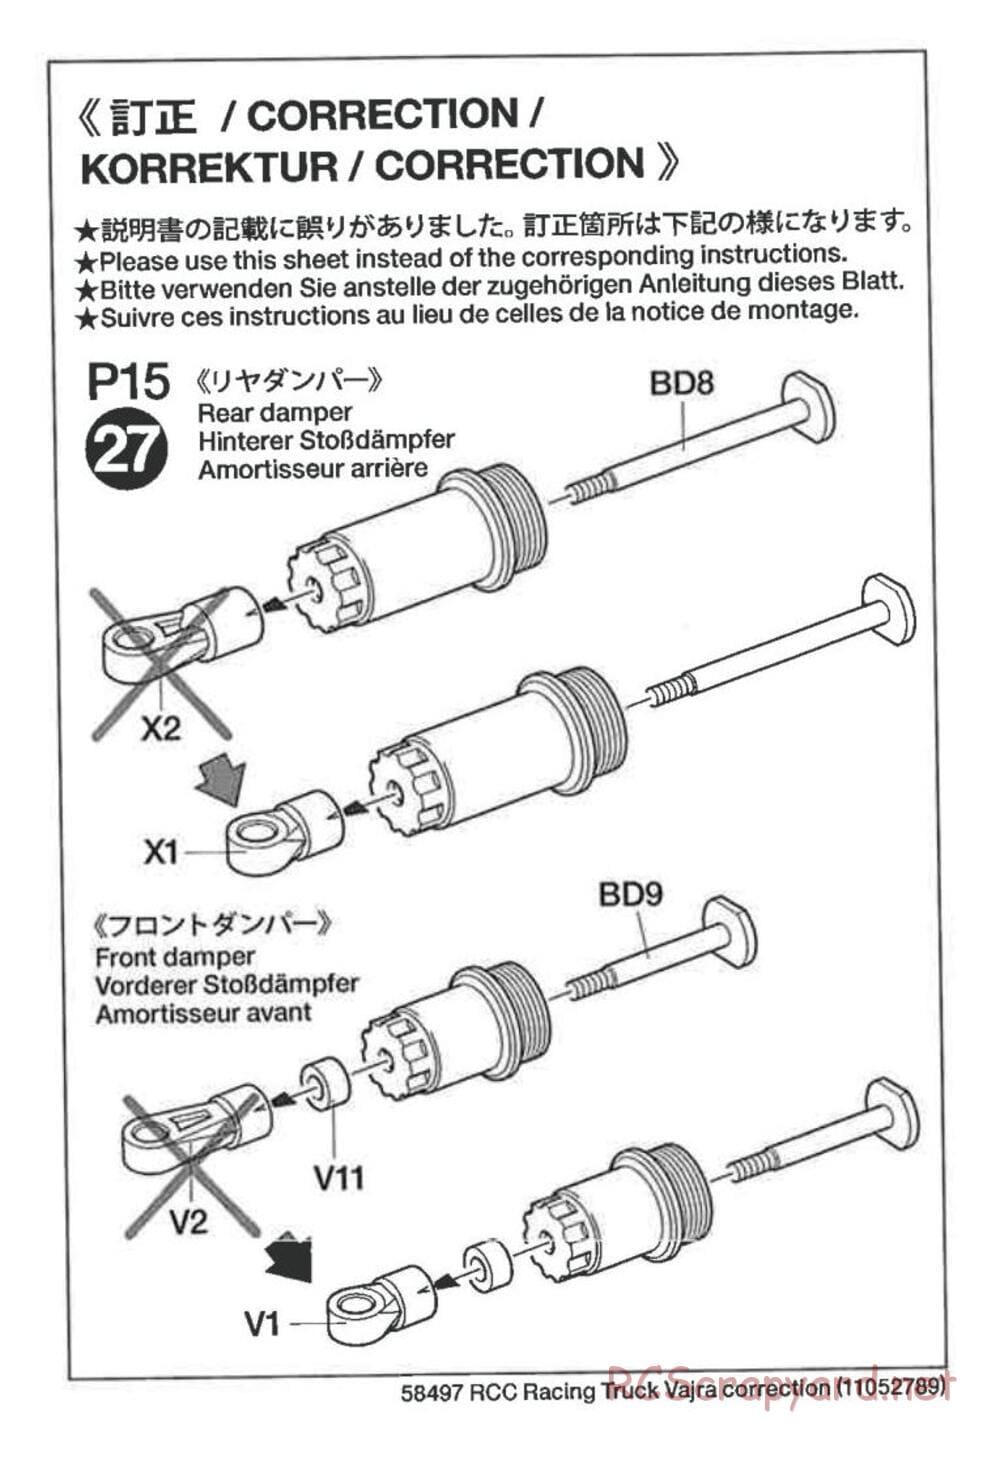 Tamiya - Vajra - AV Chassis - Manual - Page 29